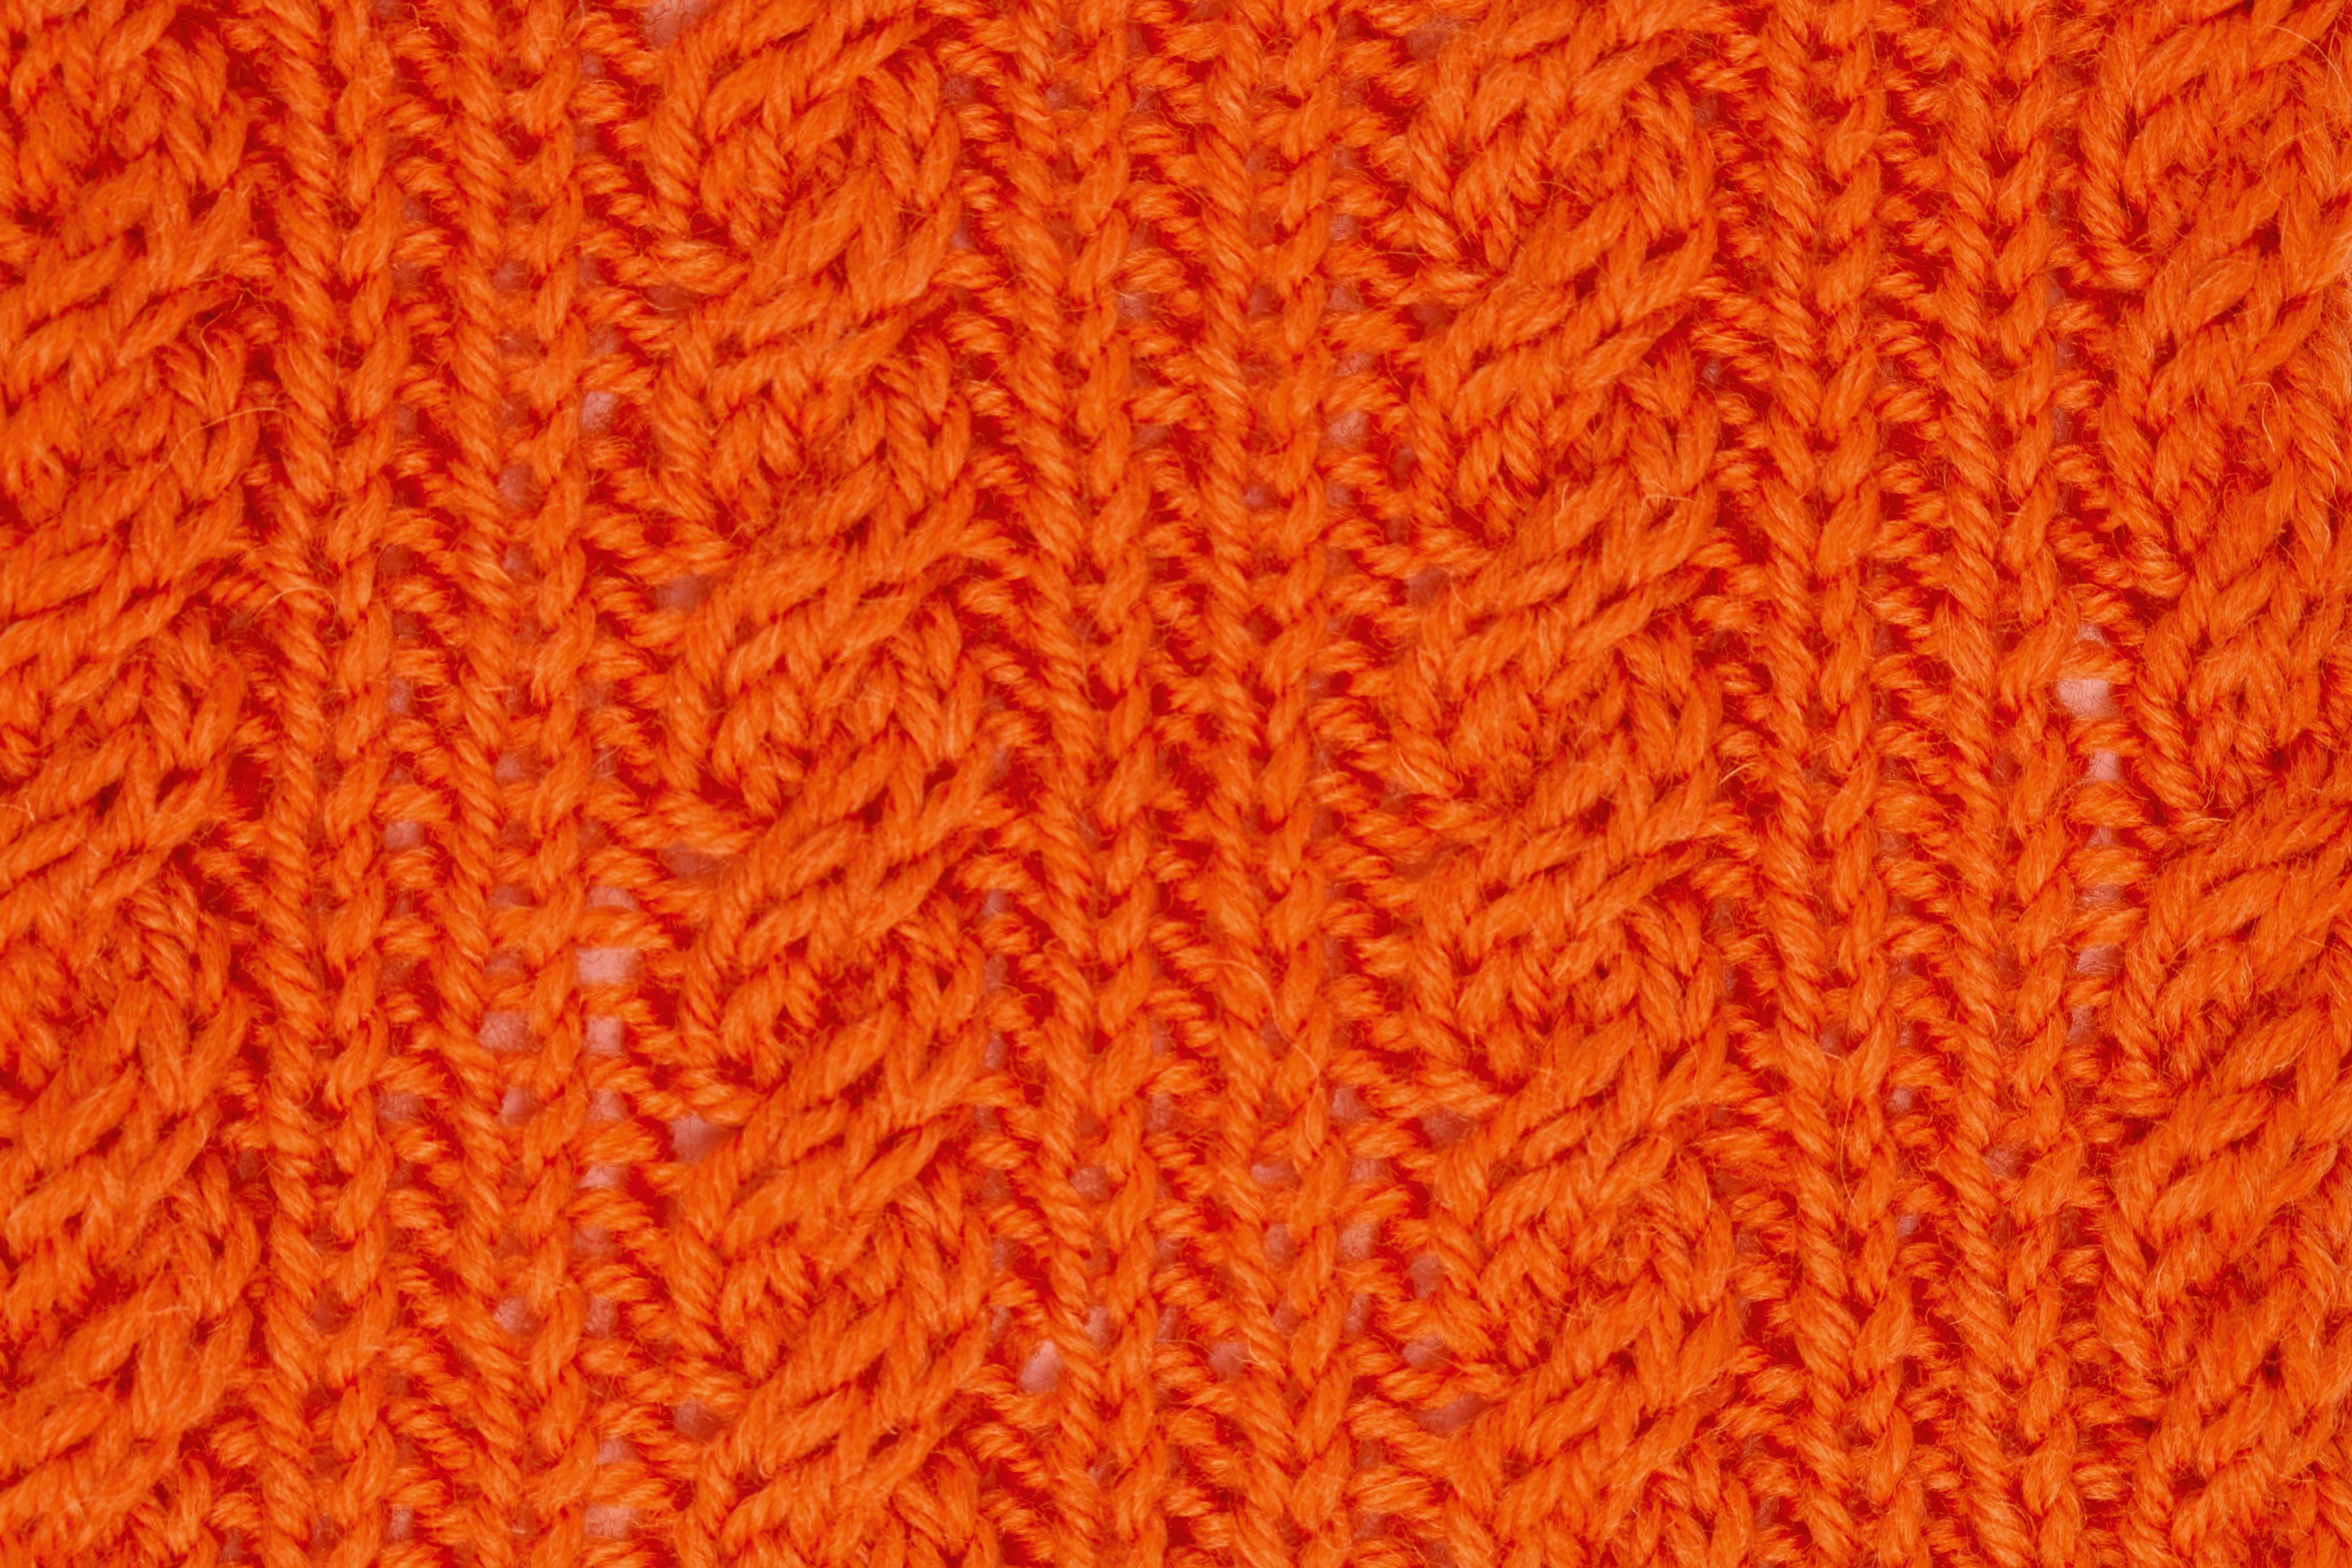 Cables stitch pattern Twists & Turns